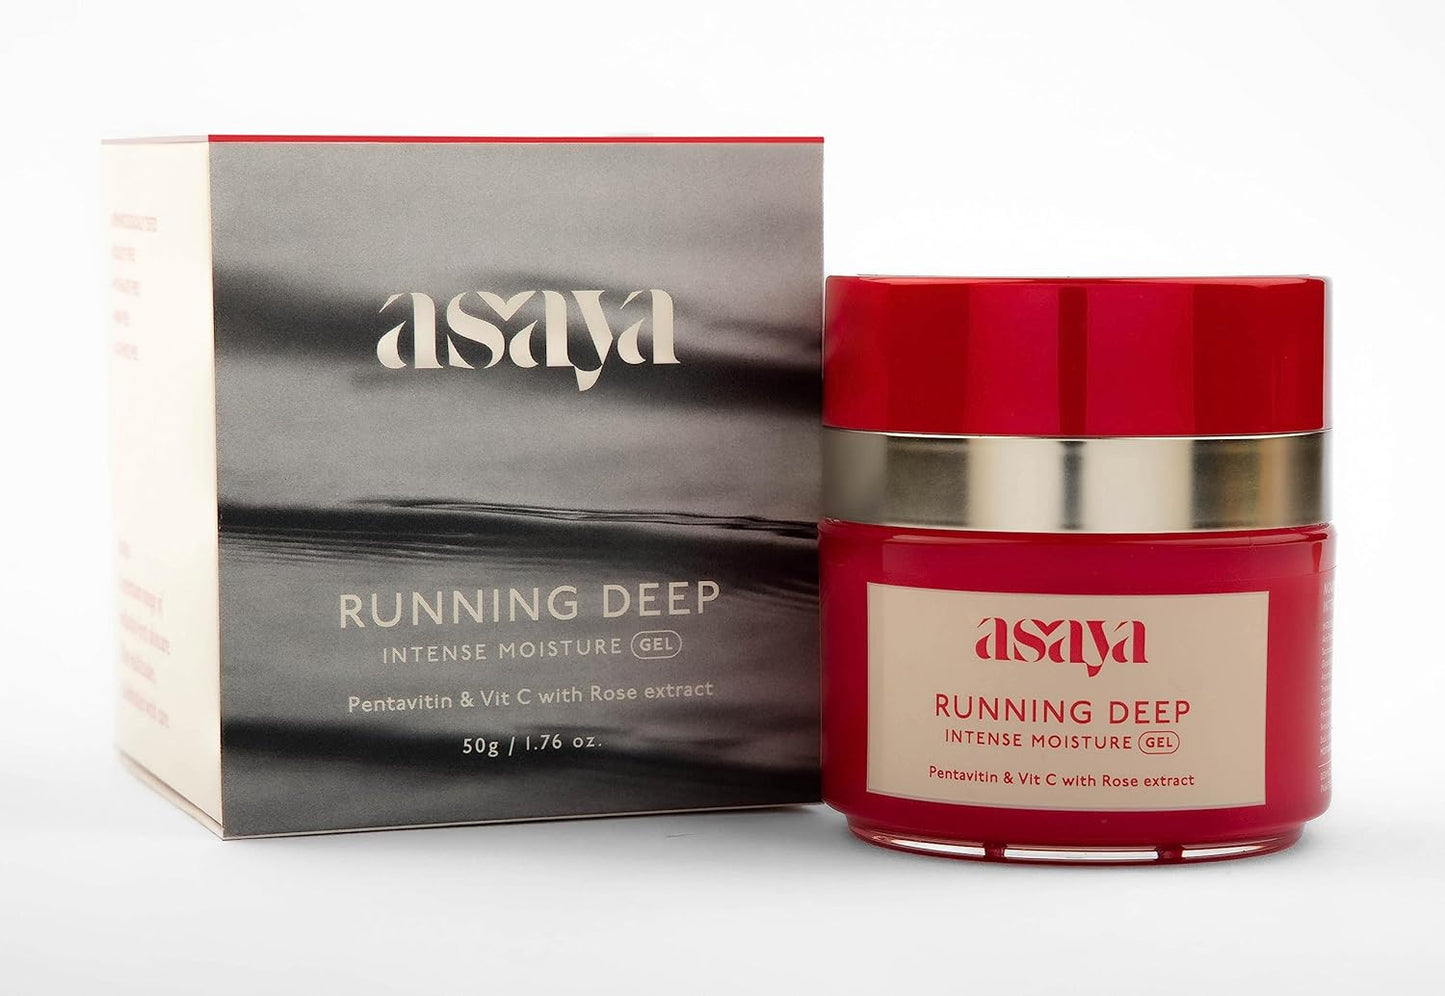 Asaya Running Deep Intense Face Moisturizer Gel, 72-Hour Hydration & Glow with Vitamin C, 50g